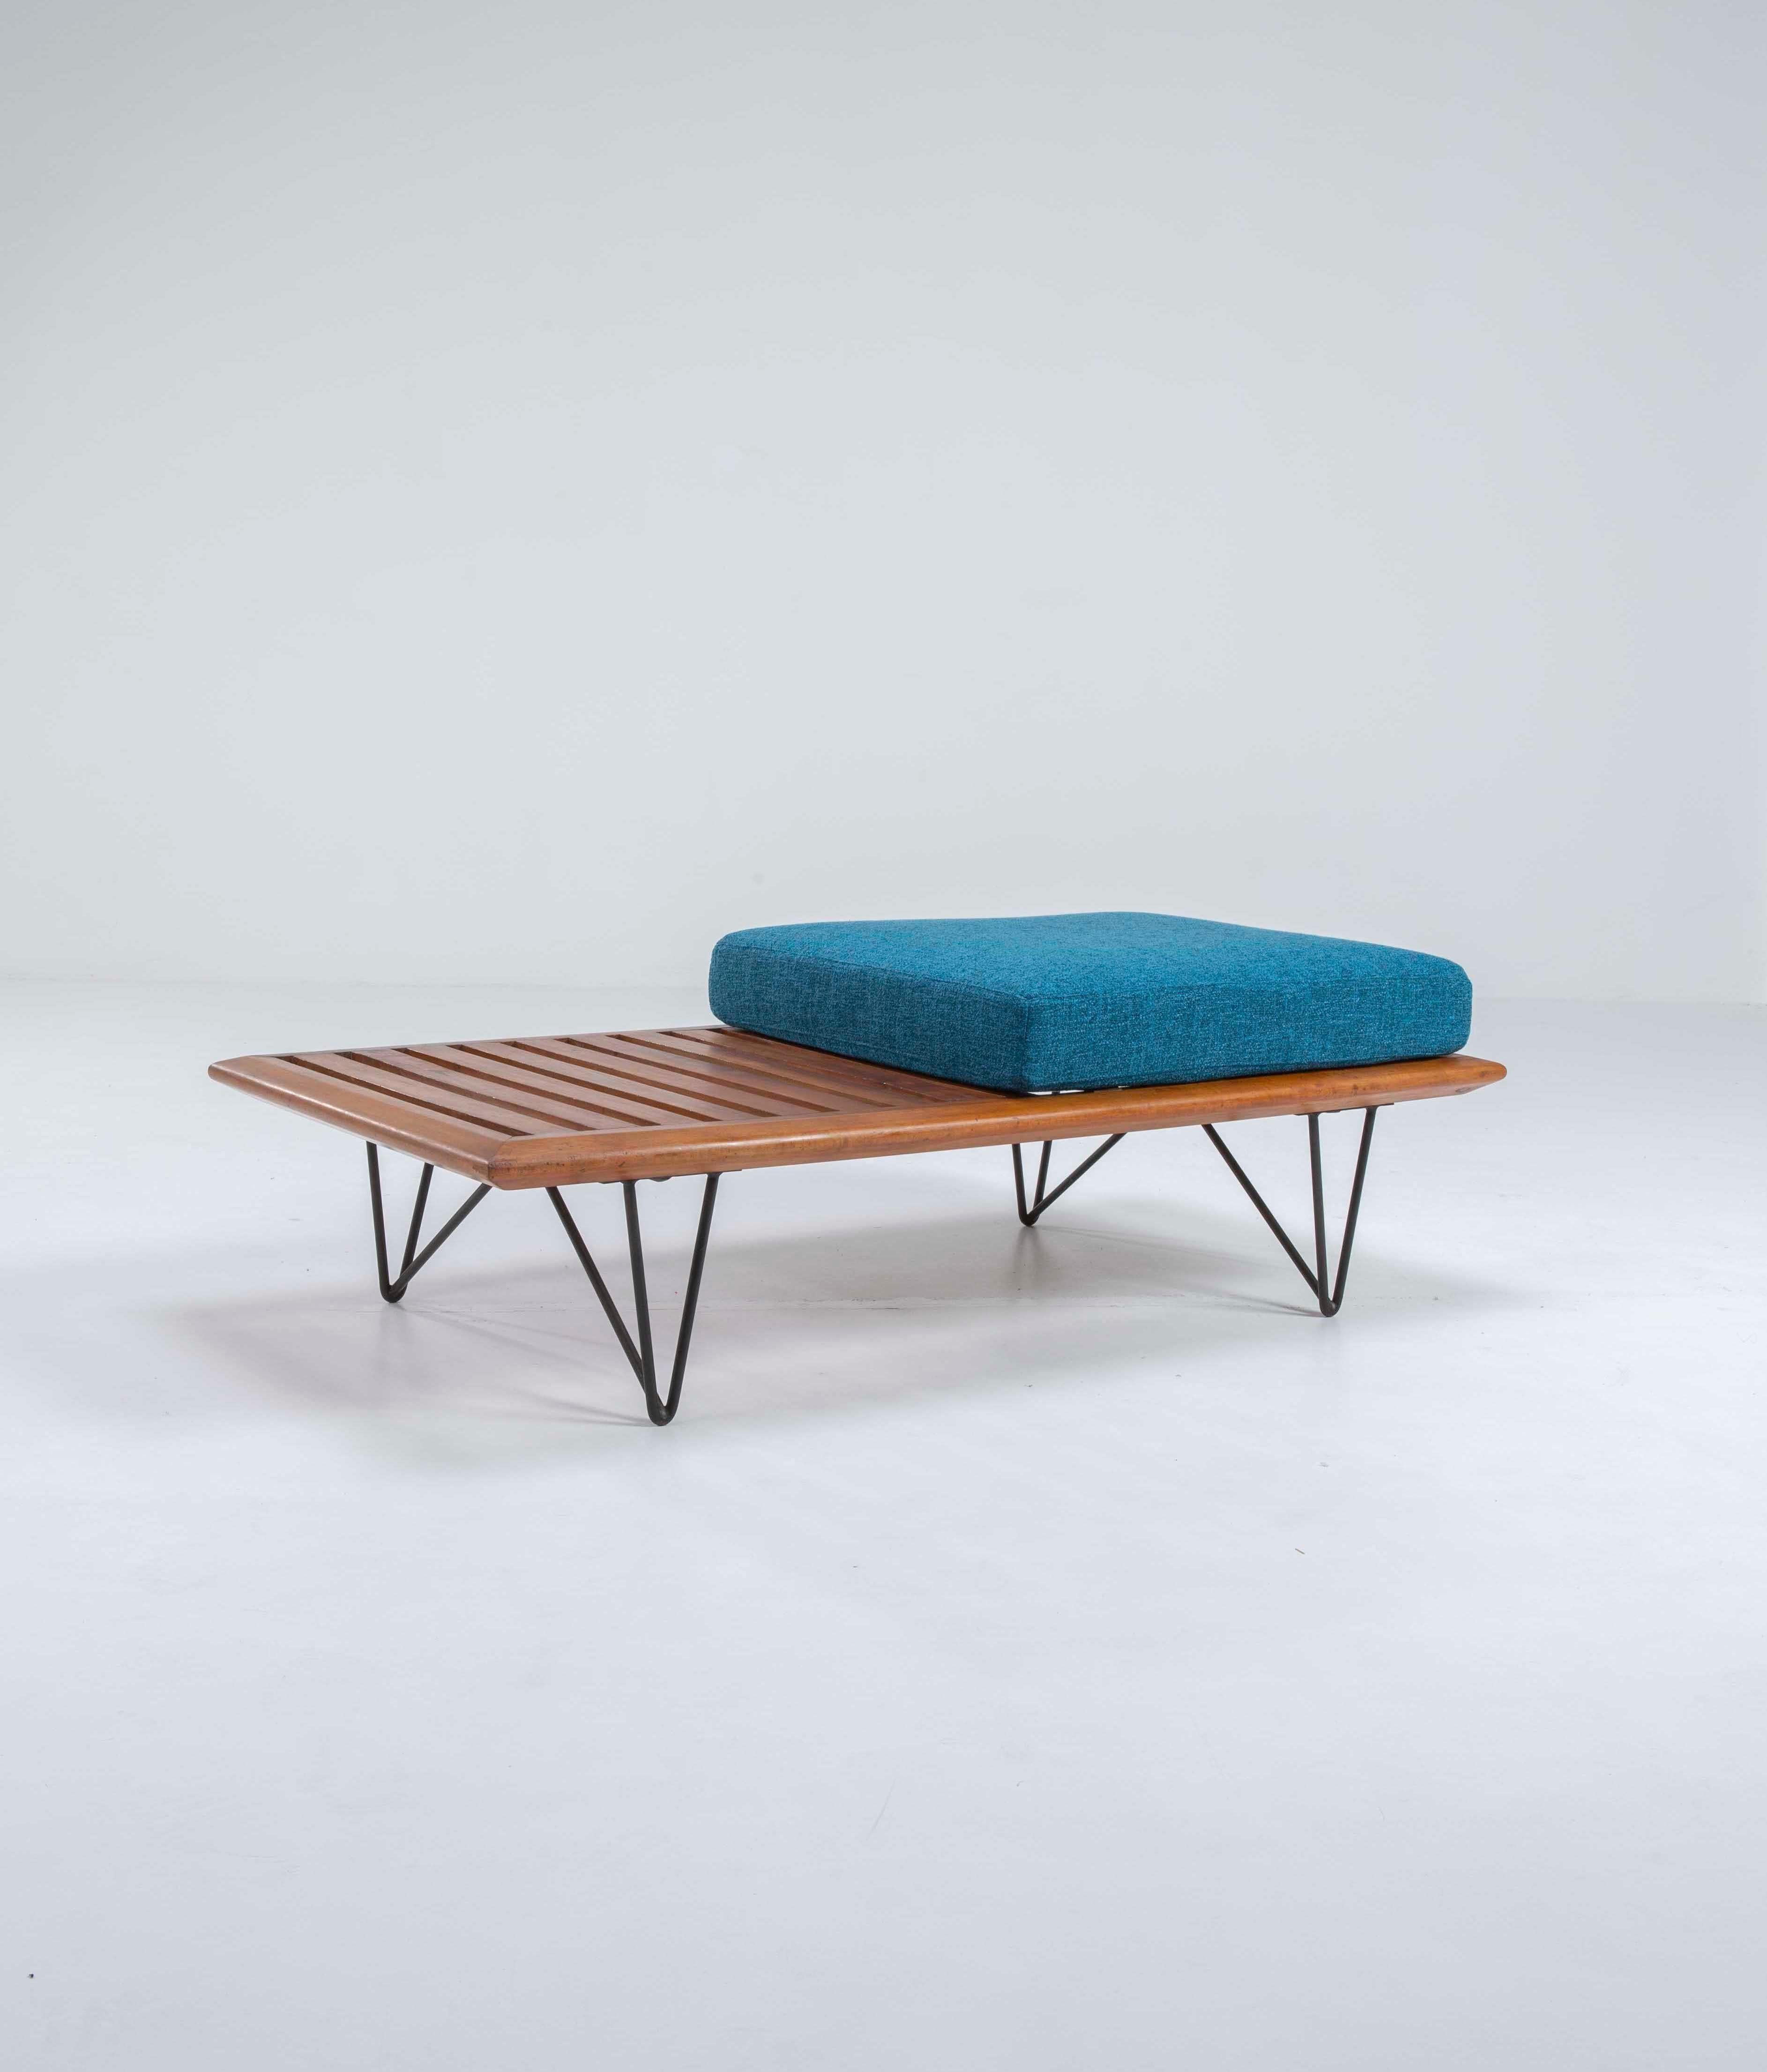 Carlo Hauner and Martin Eisler Rare bench - 1950s Italian Scandinavian Design In Good Condition For Sale In Milan, IT